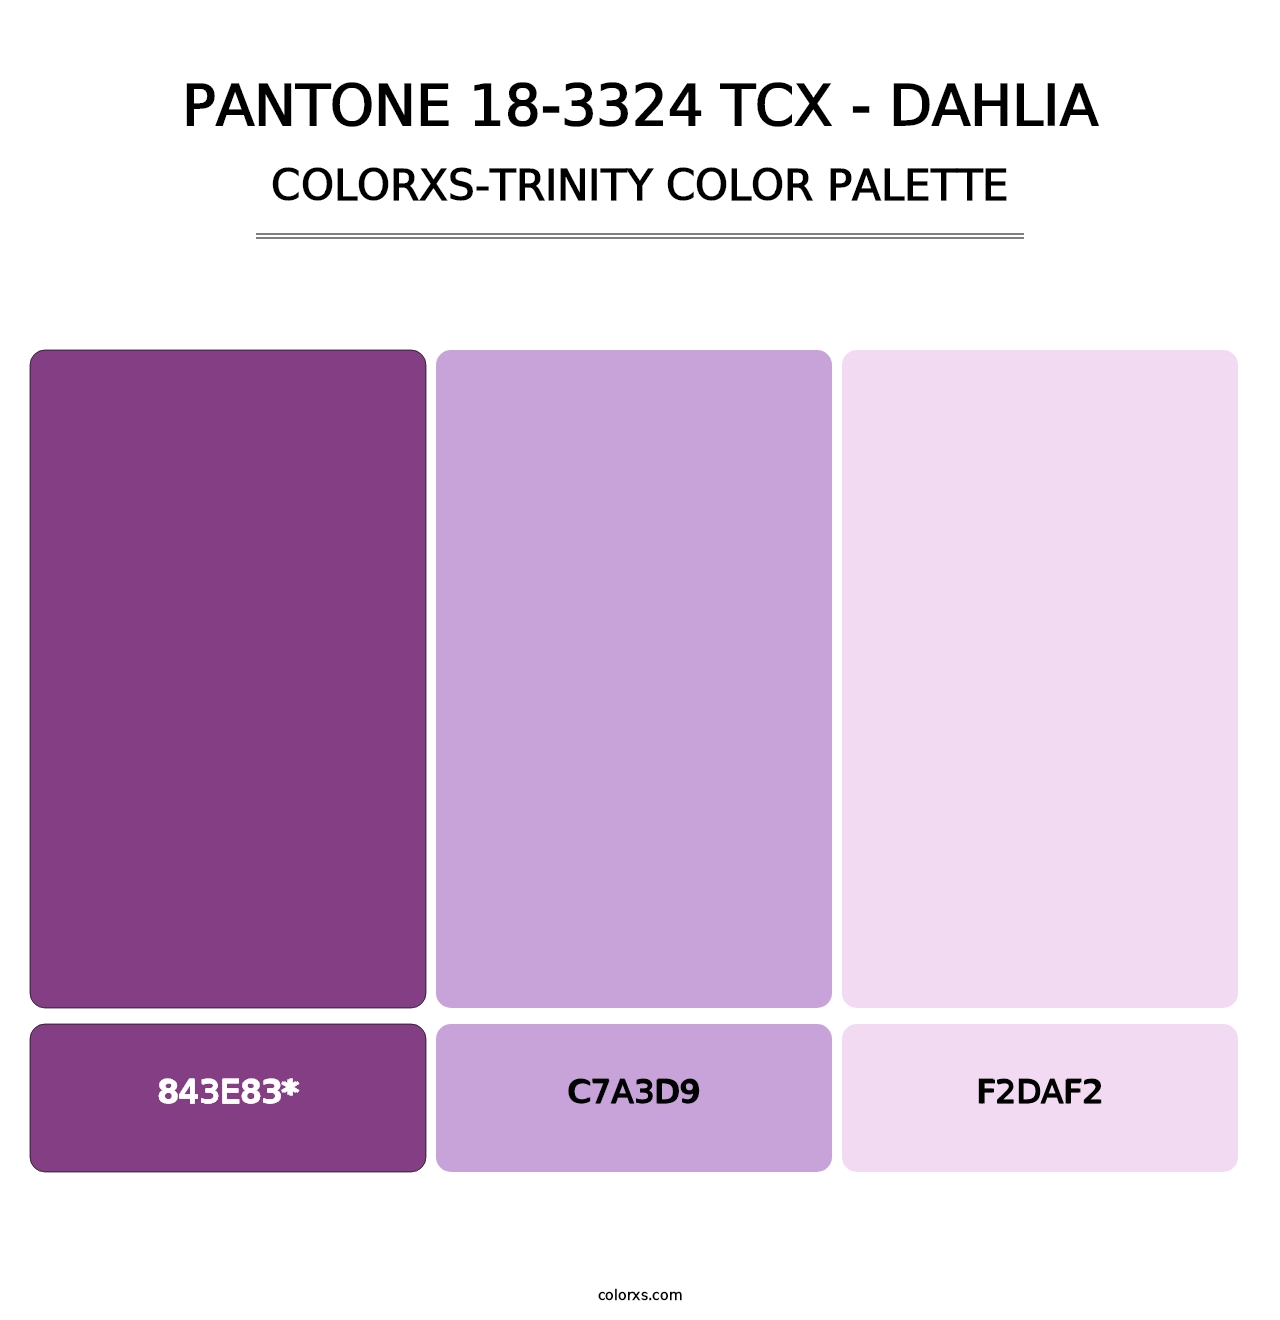 PANTONE 18-3324 TCX - Dahlia - Colorxs Trinity Palette